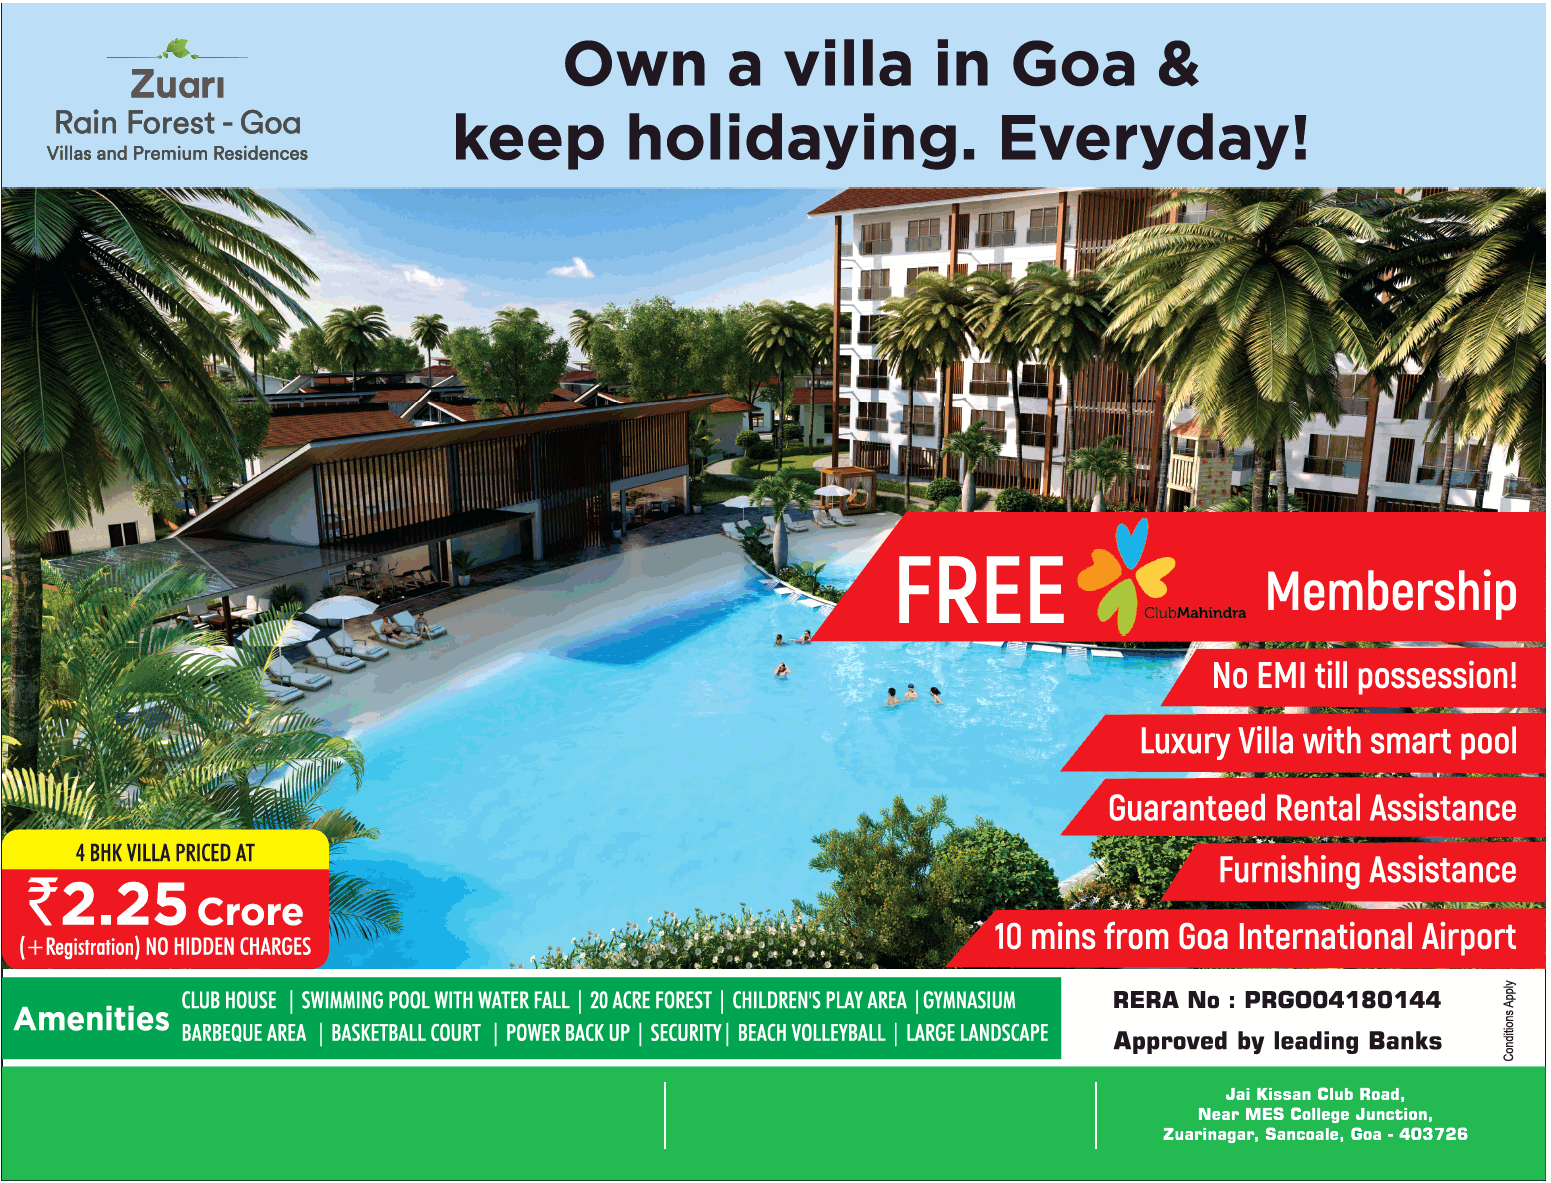 4 BHK villa priced Rs 2.25 Cr at Zuari Rain Forest, Goa